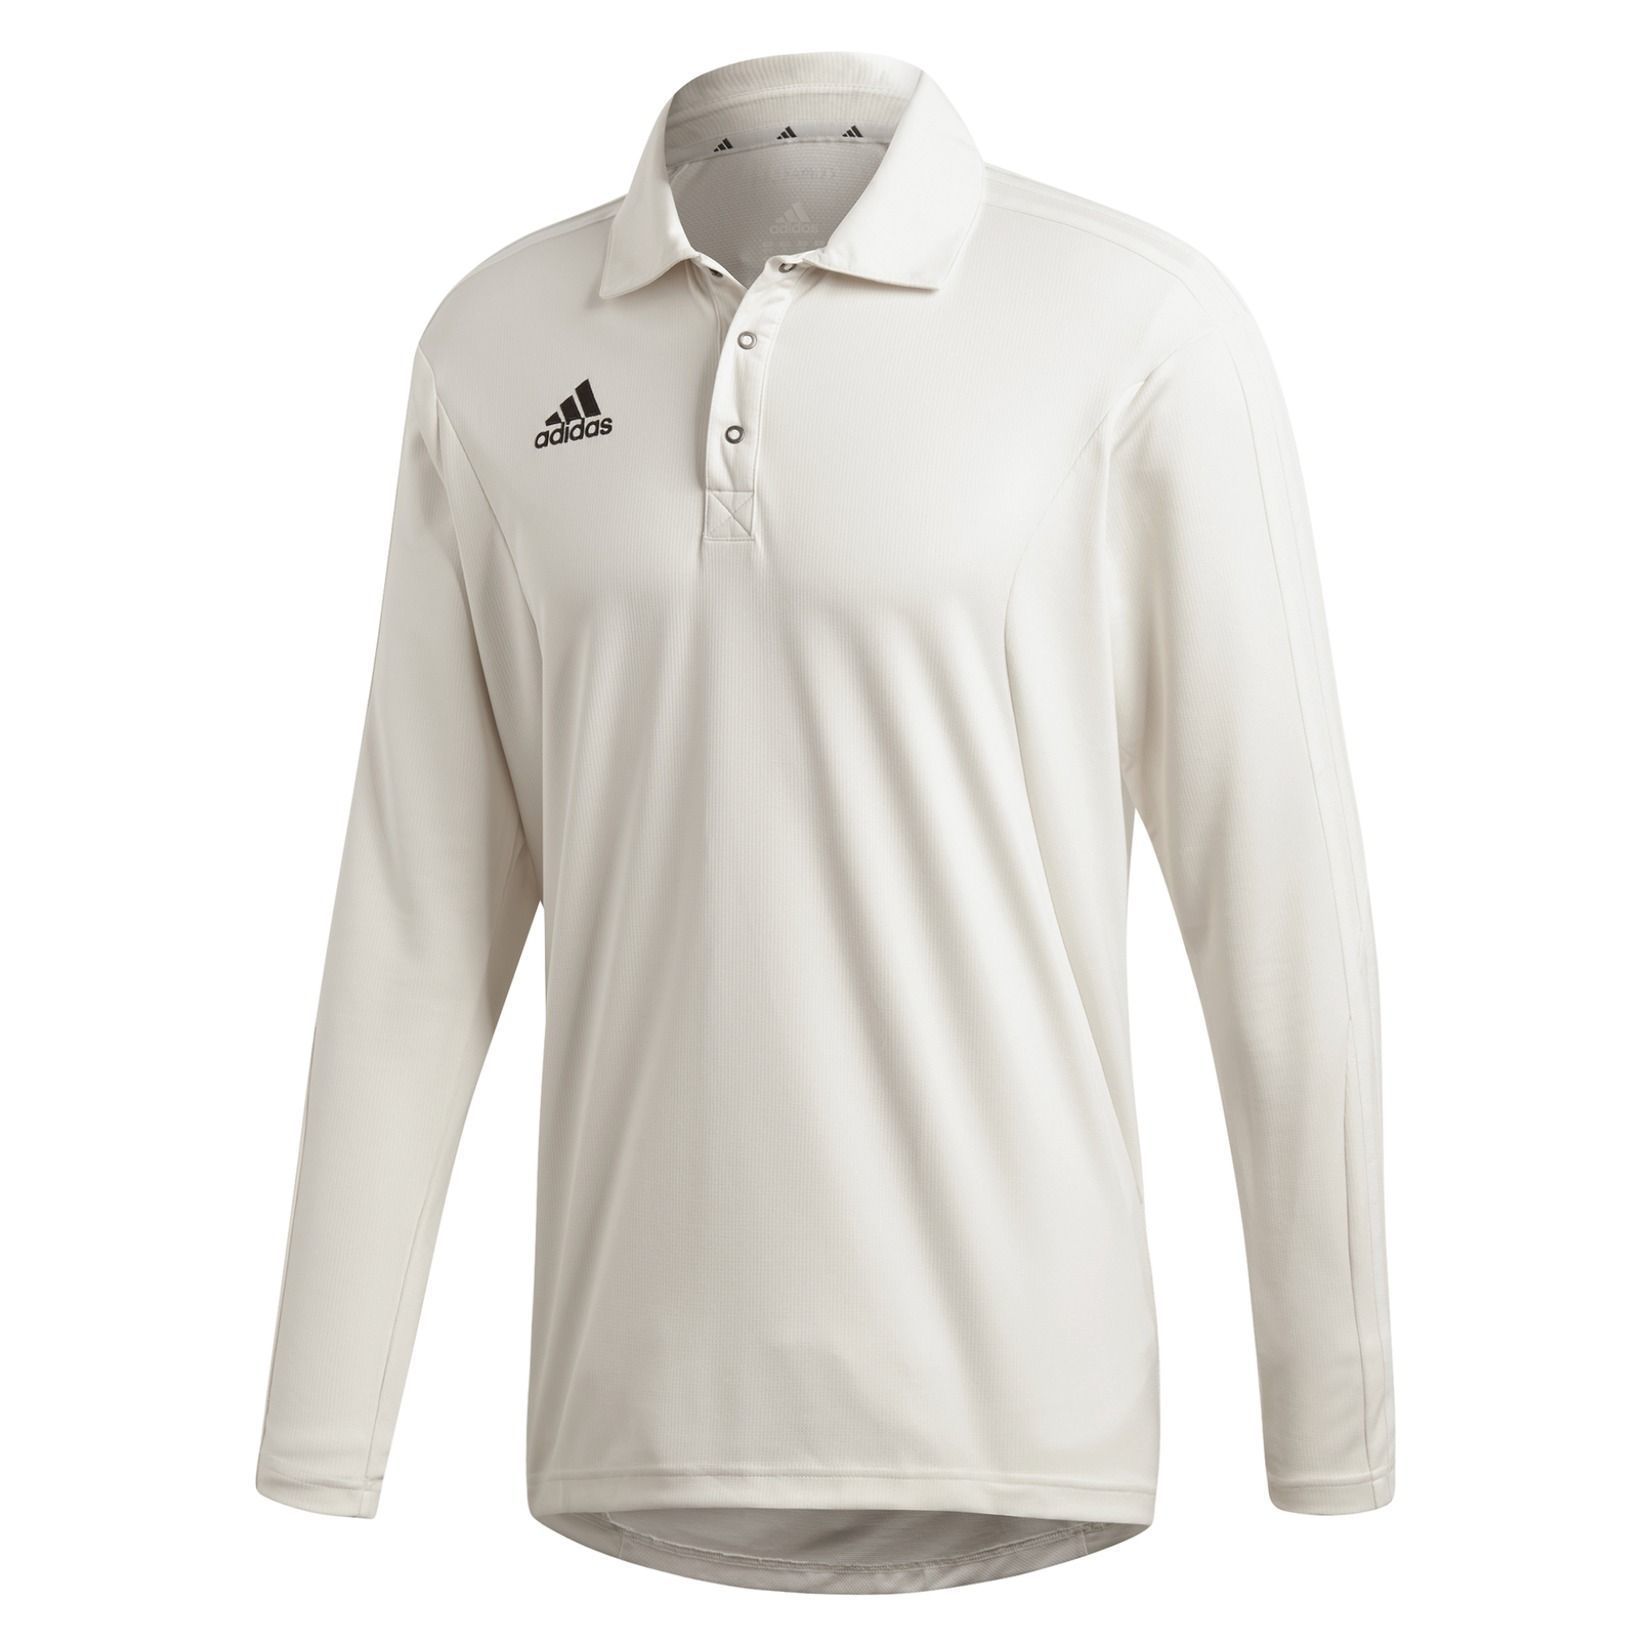 adidas Long Sleeve Cricket Shirt 